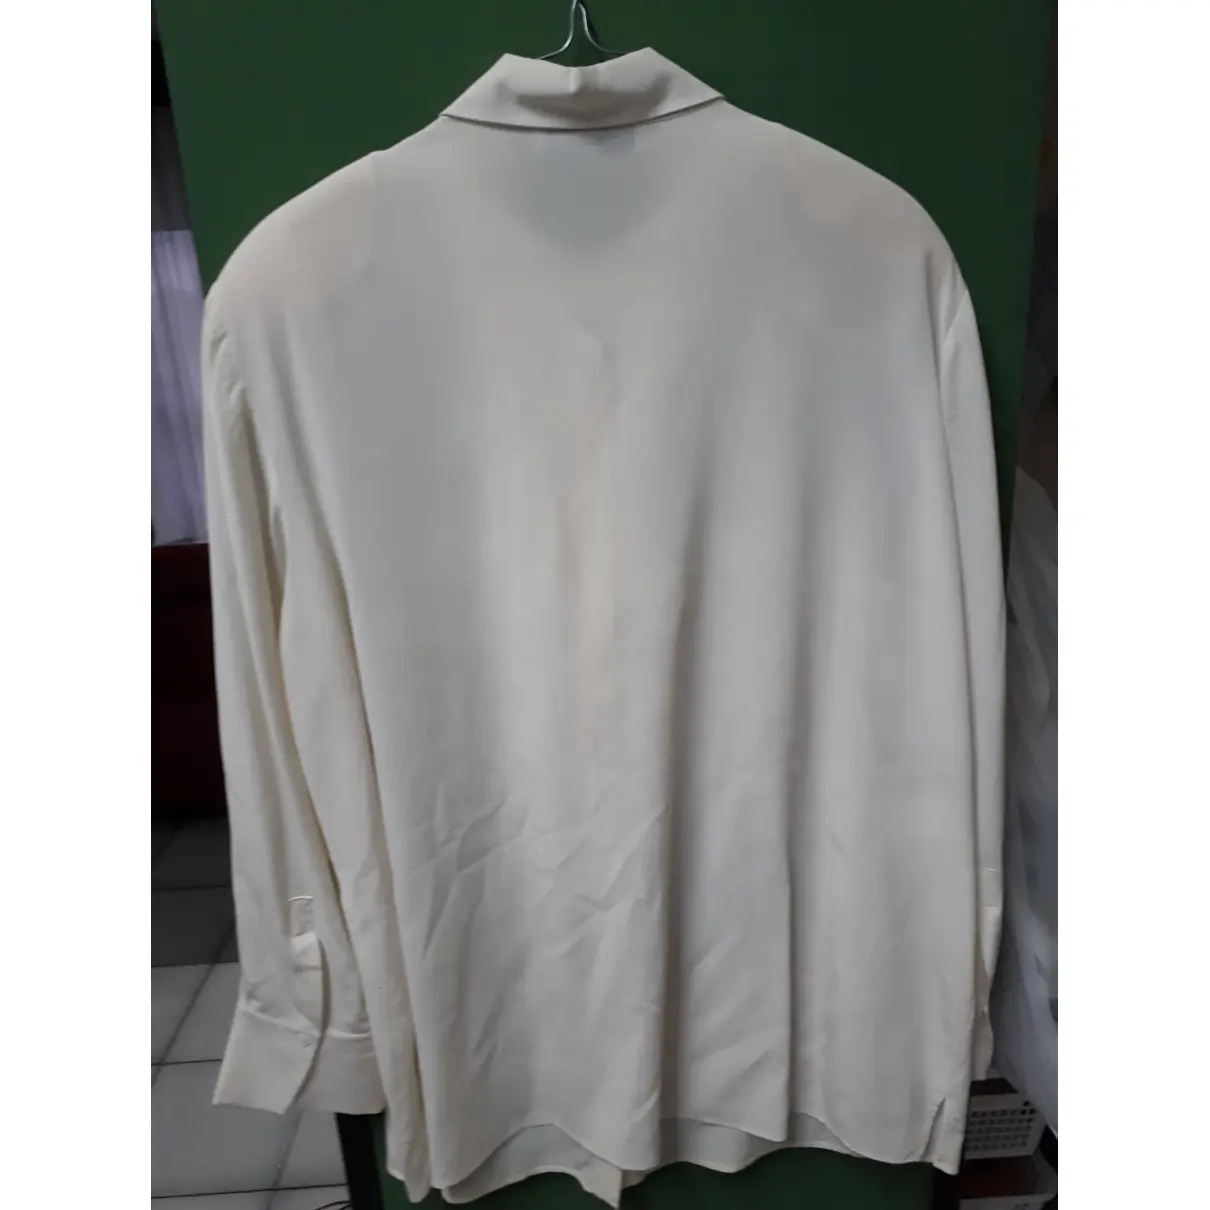 Elena Miro Silk jacket for sale - Vintage